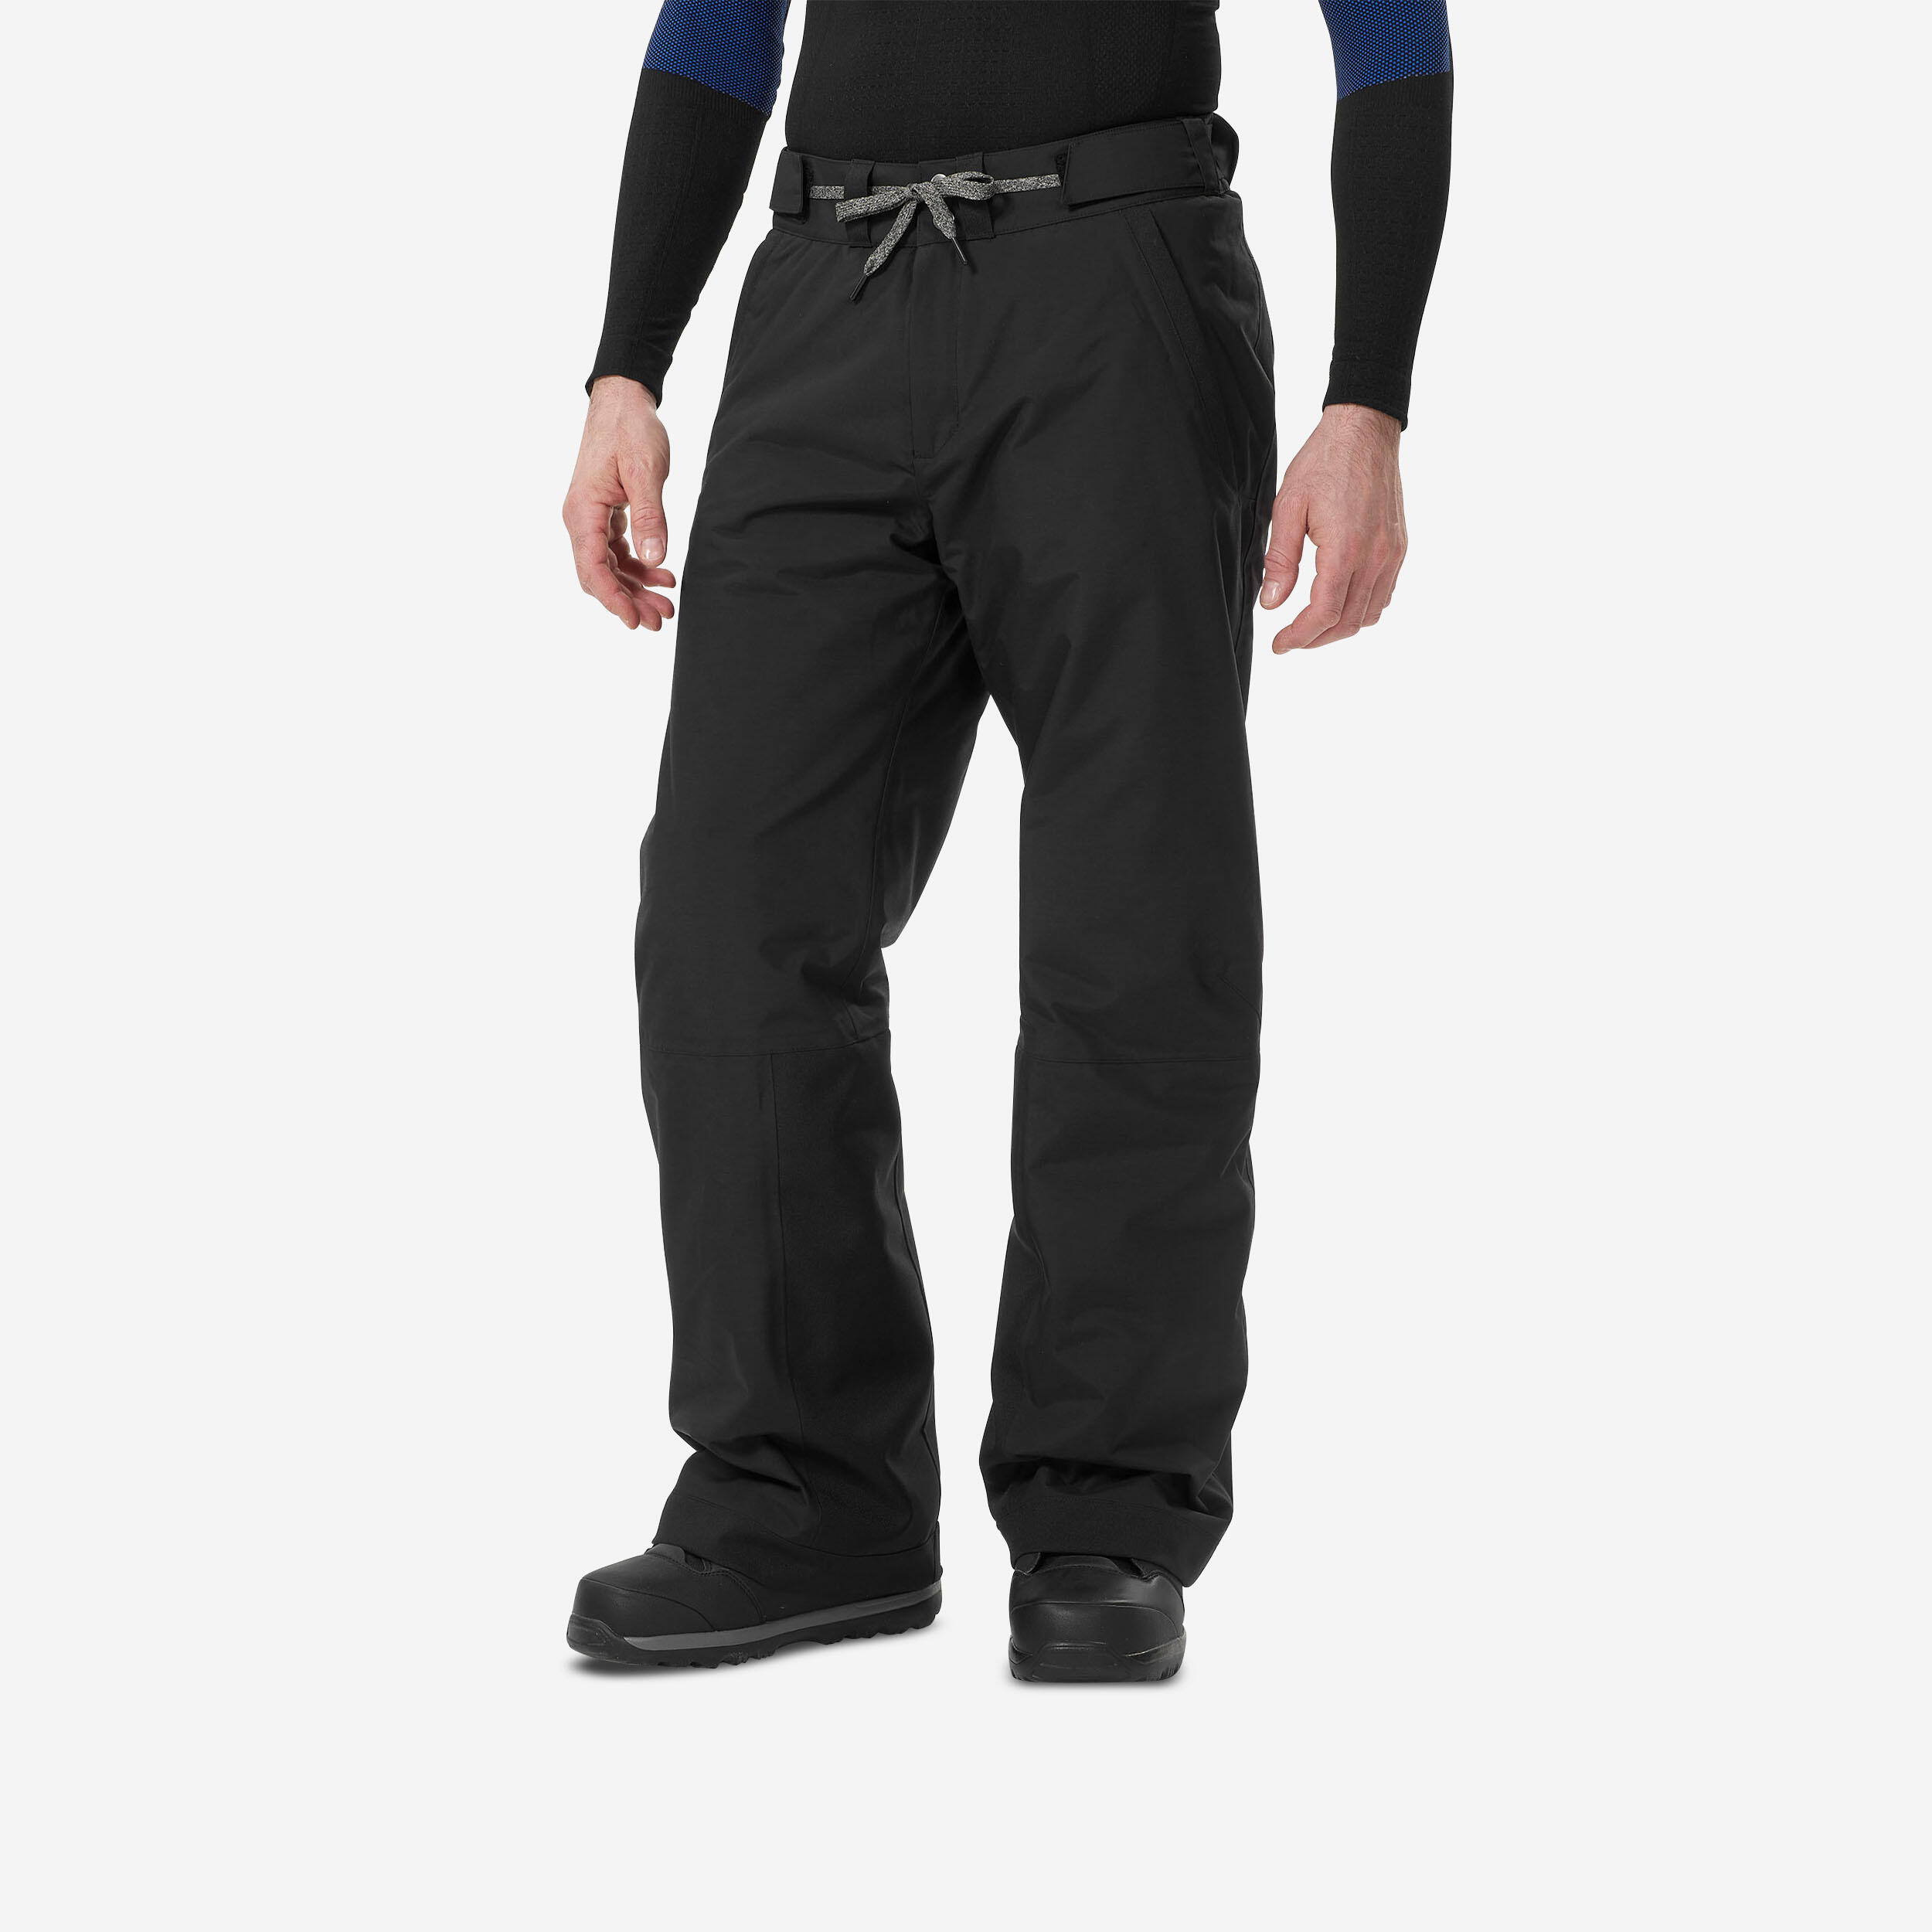 Men’s Snowboard Pants - SNB 100 Black